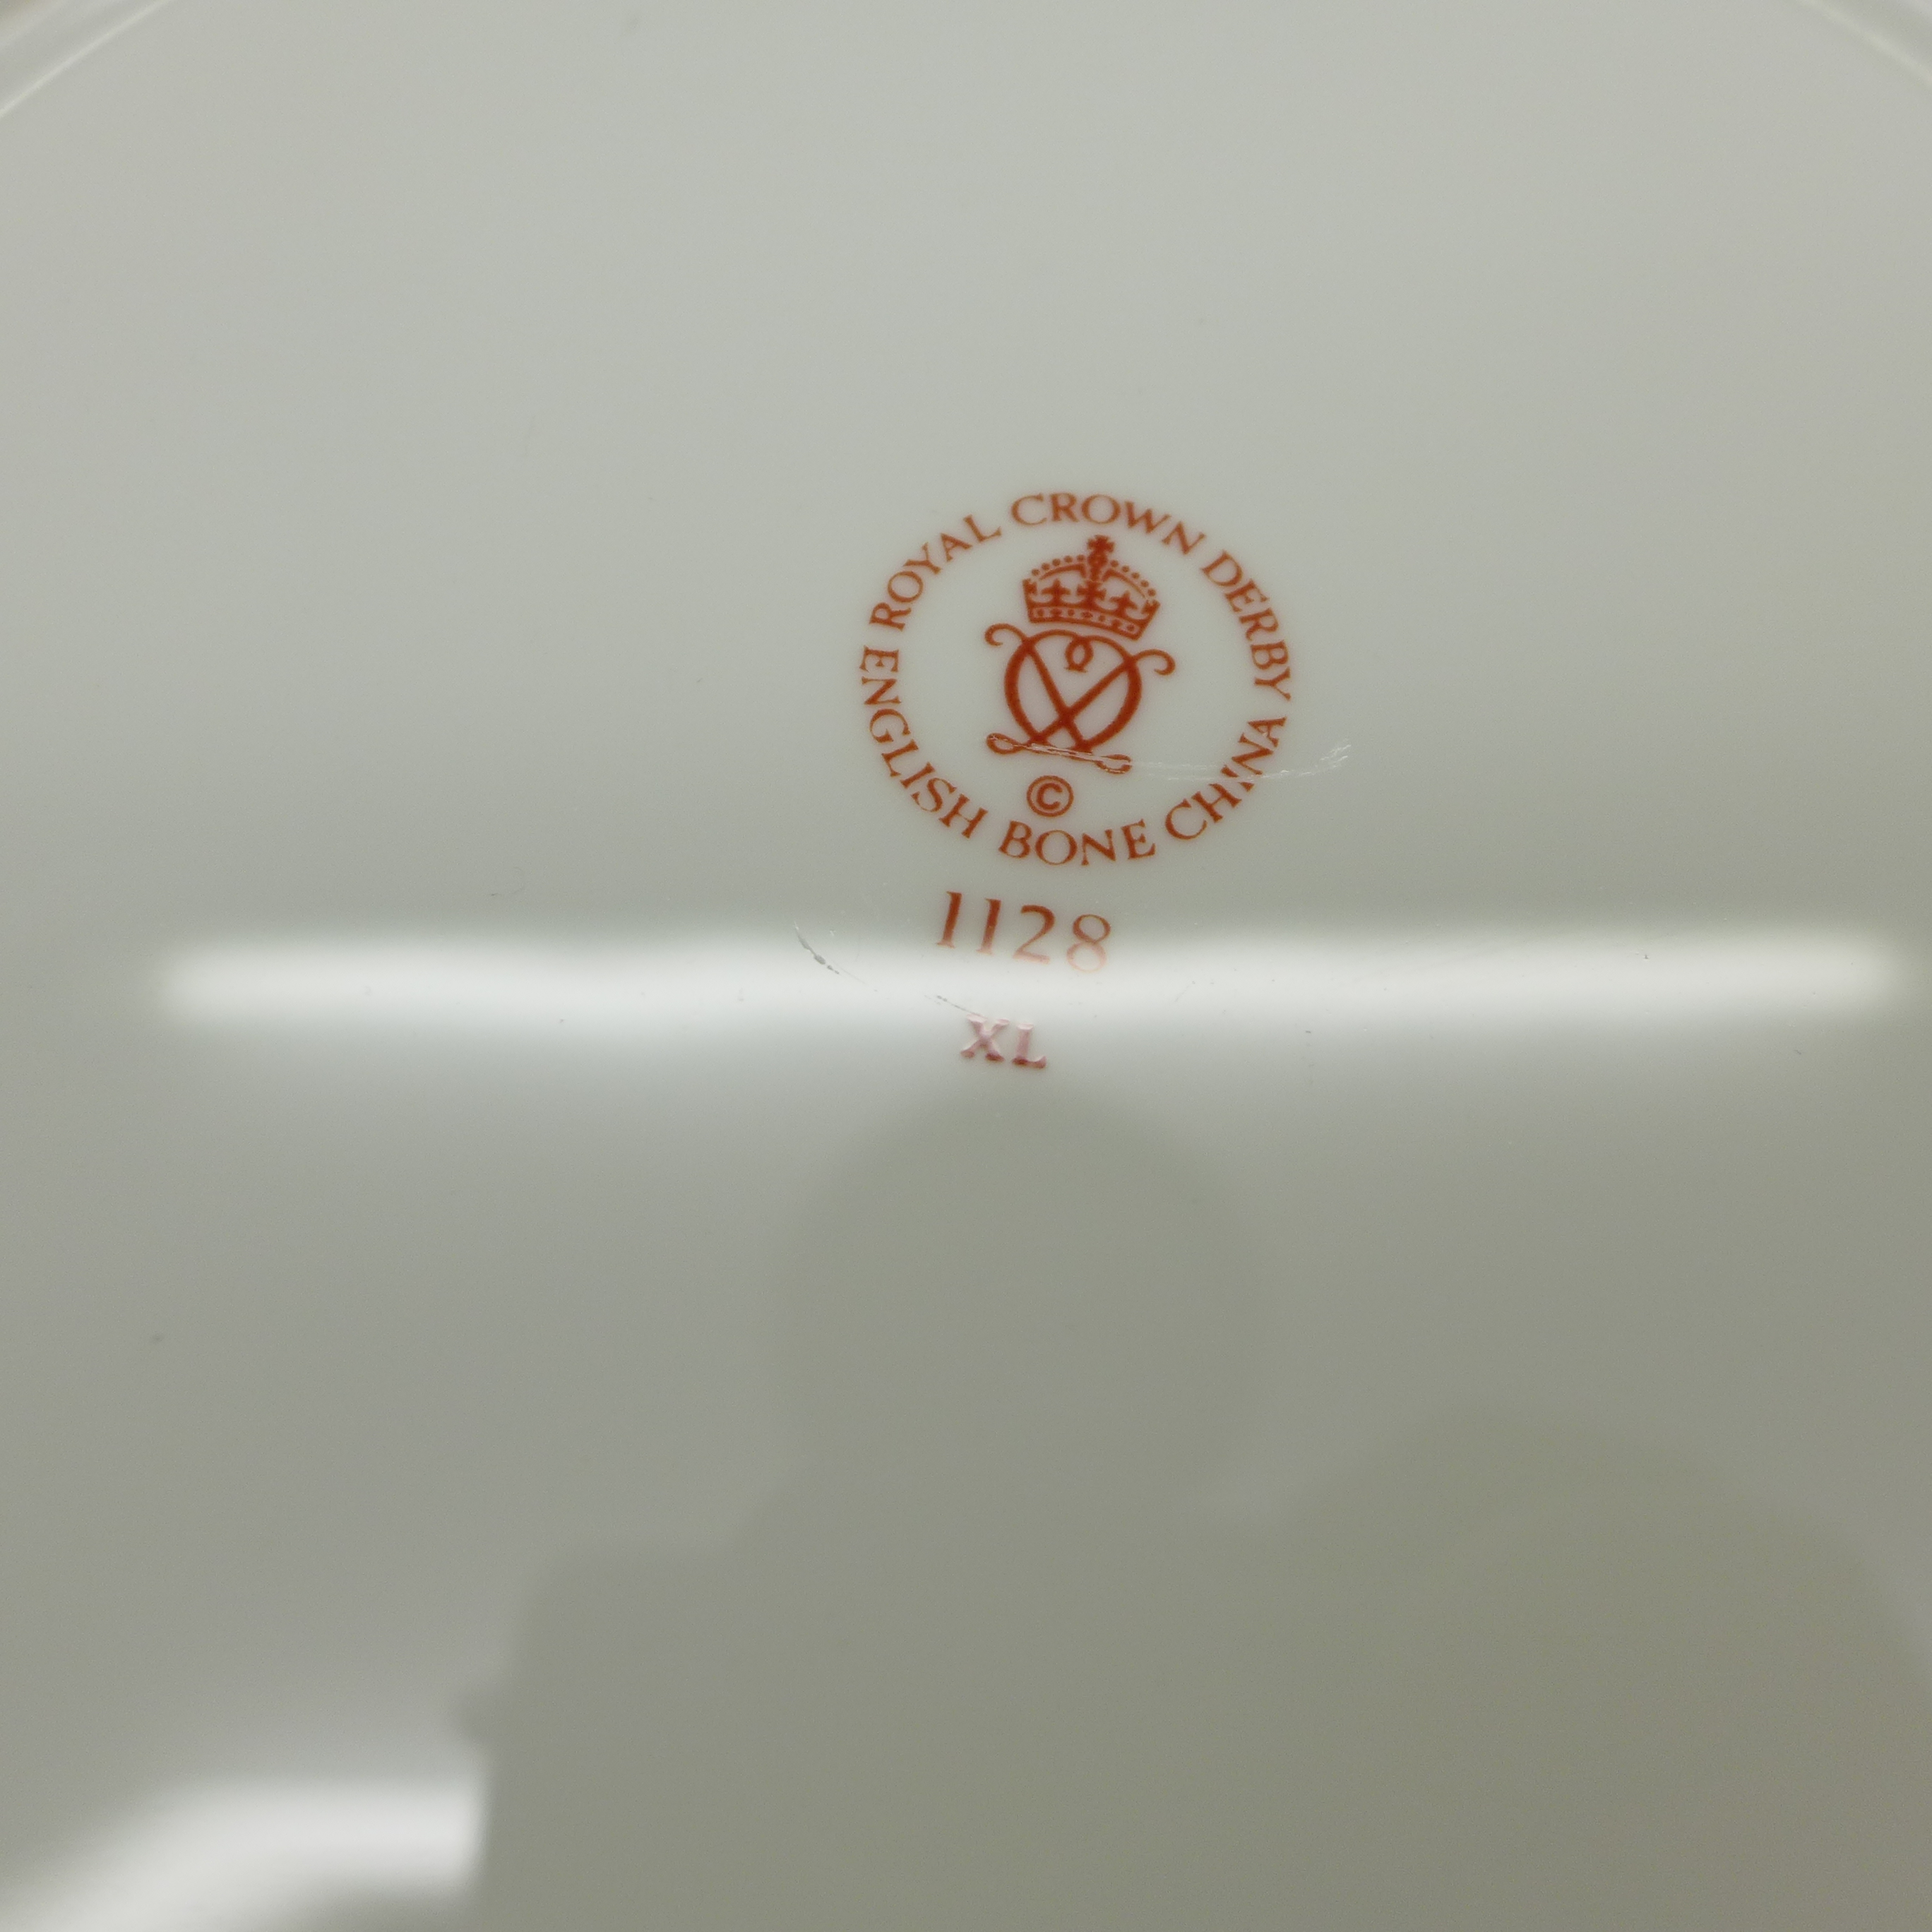 A Royal Crown Derby Imari 1128 pattern plate, 27cm - Image 2 of 2